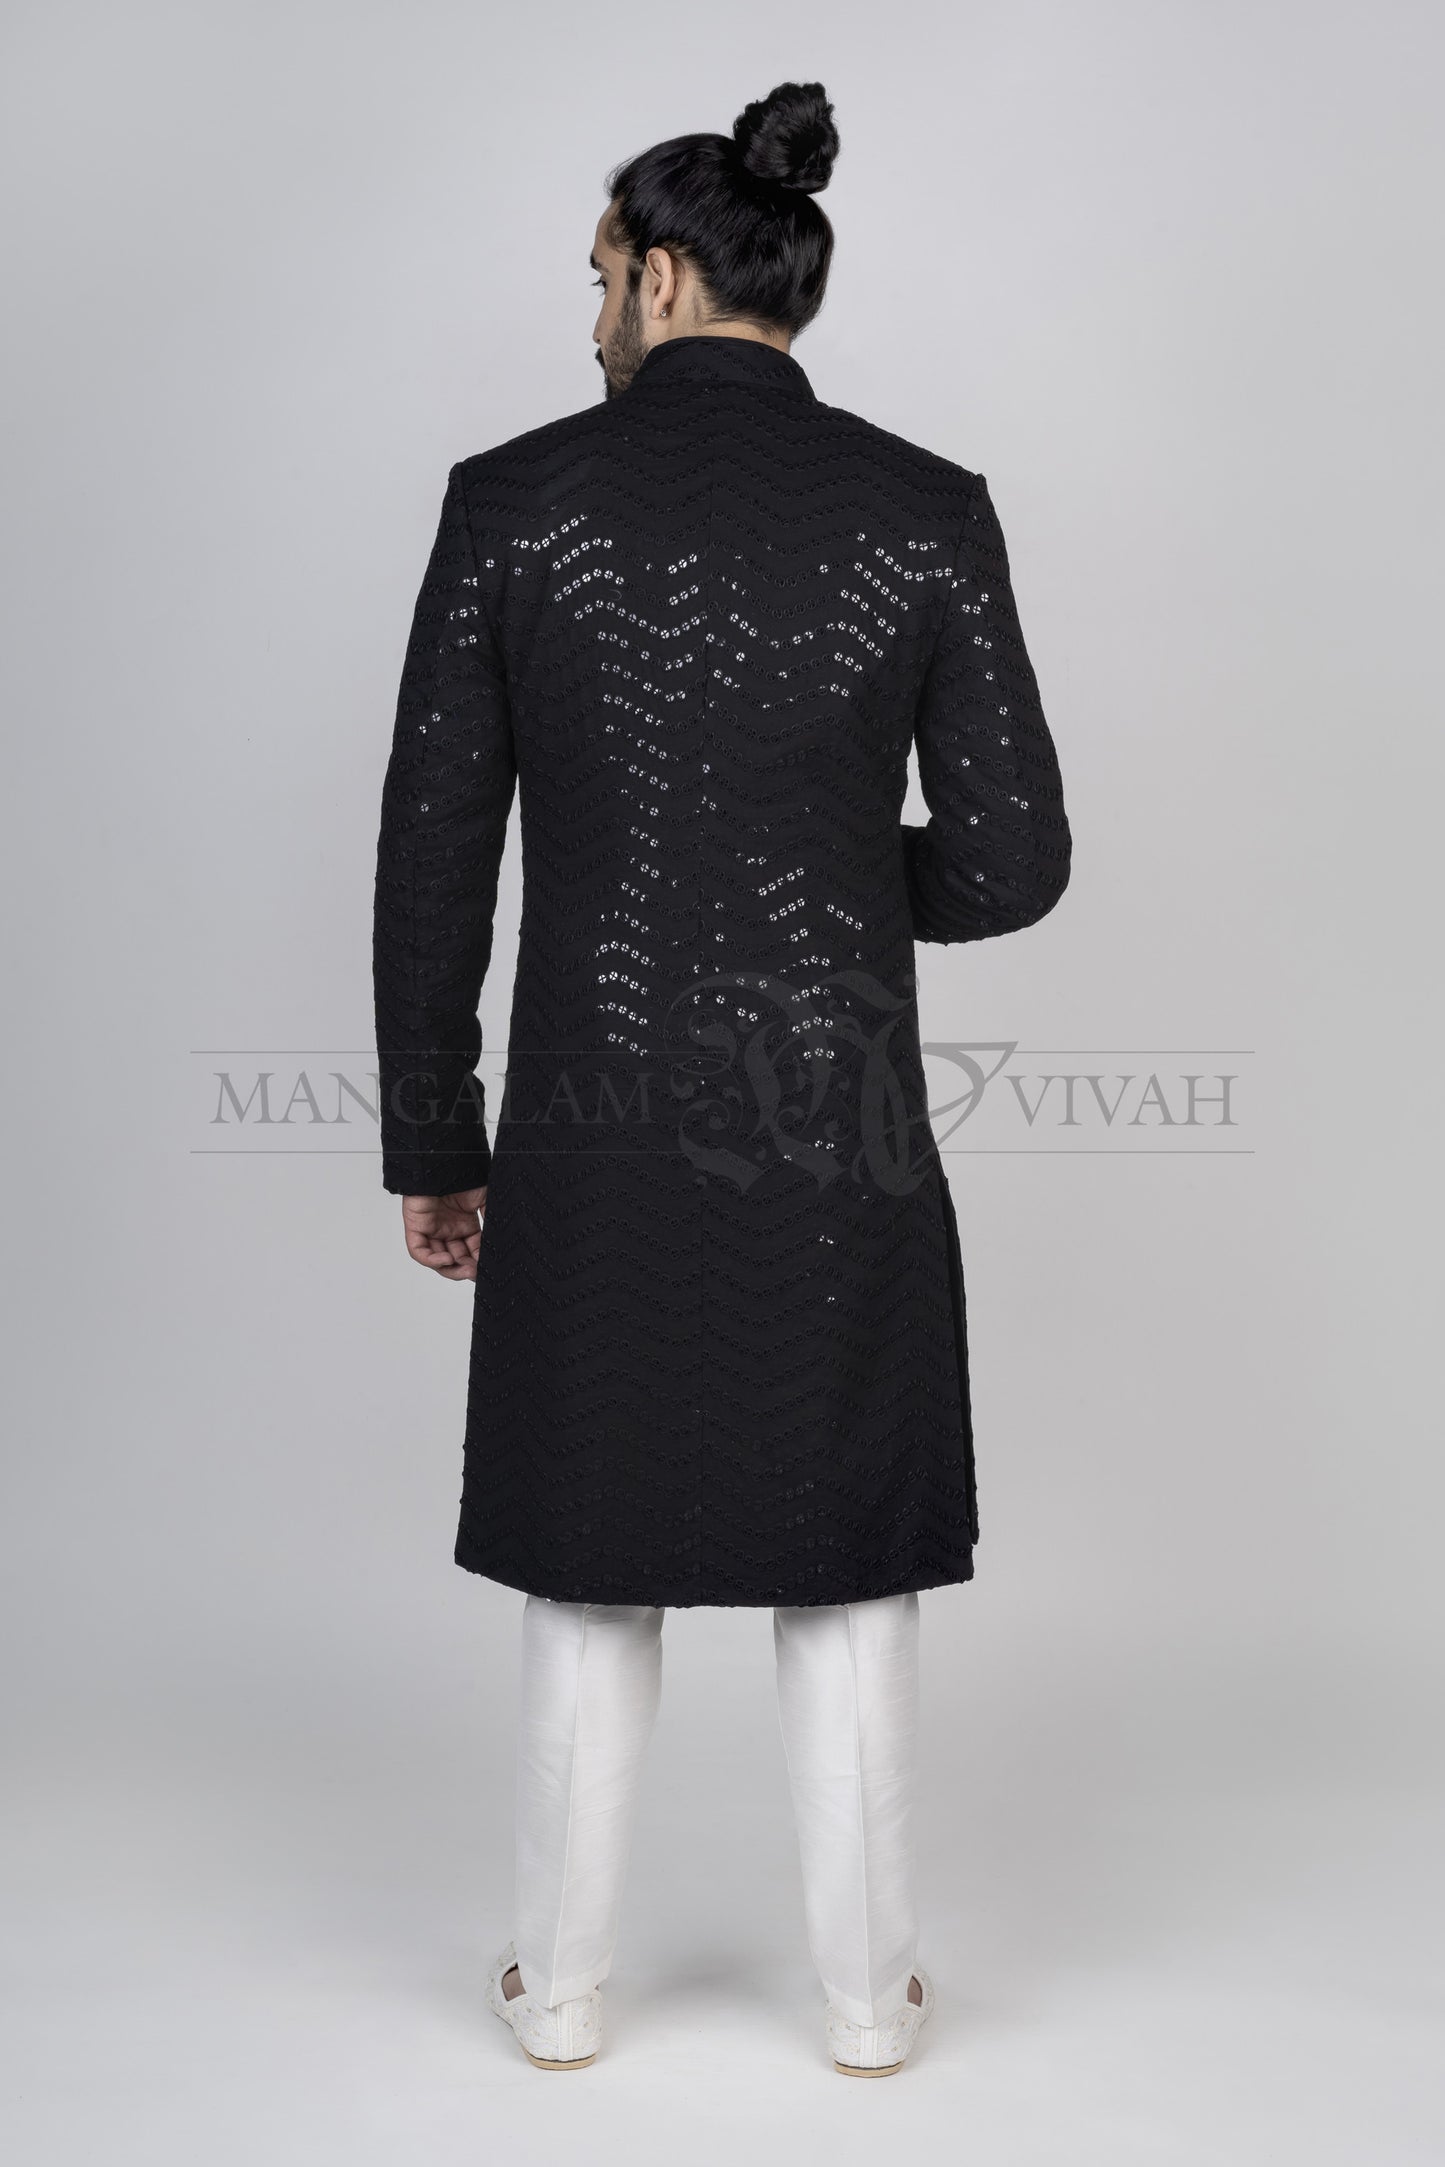 Royal Black Cotton Silk Indo-Western Sherwani Set